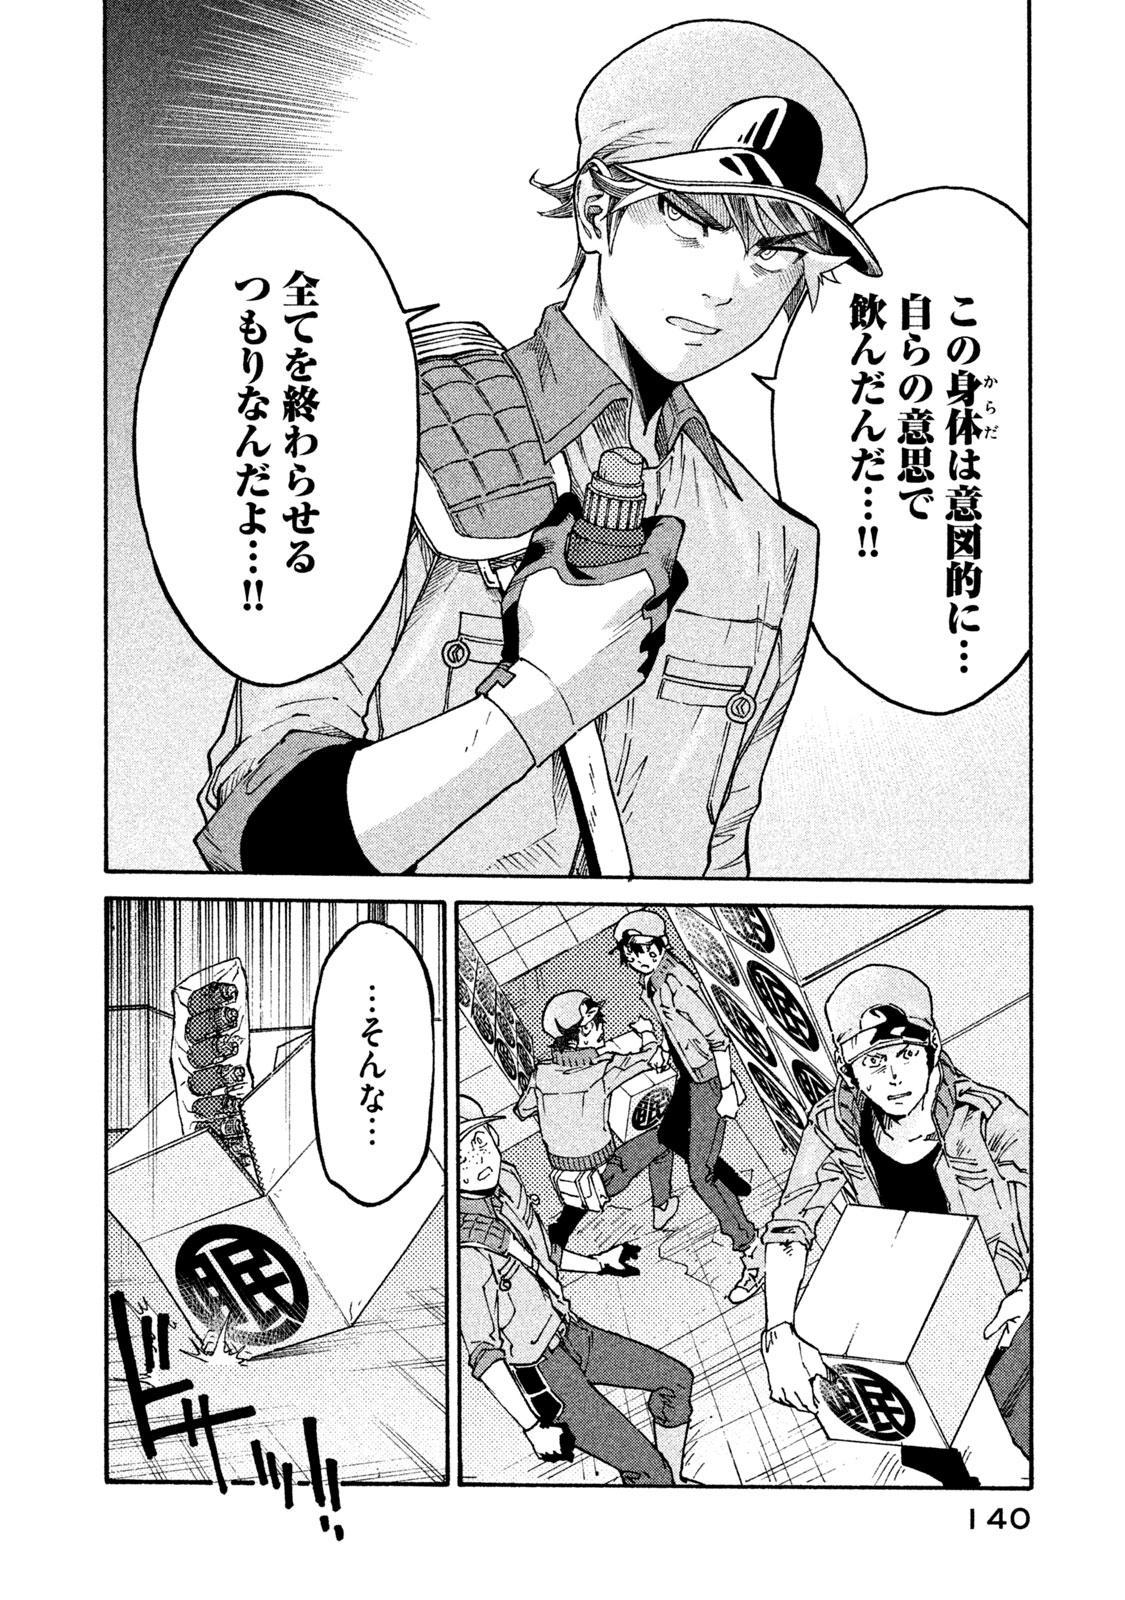 Hataraku Saibou BLACK - Chapter 31 - Page 16